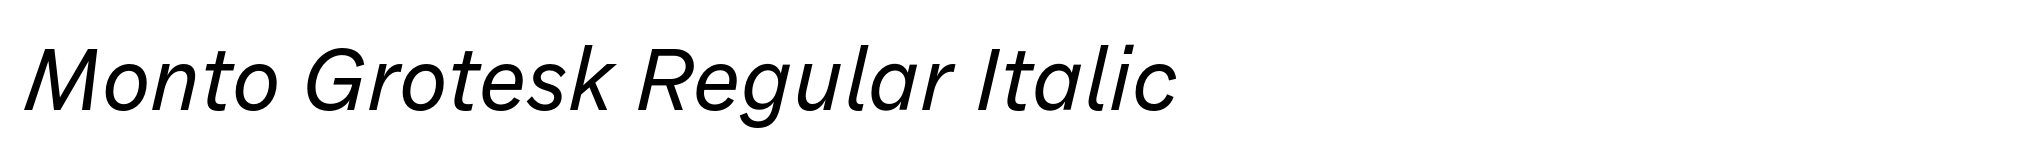 Monto Grotesk Regular Italic image